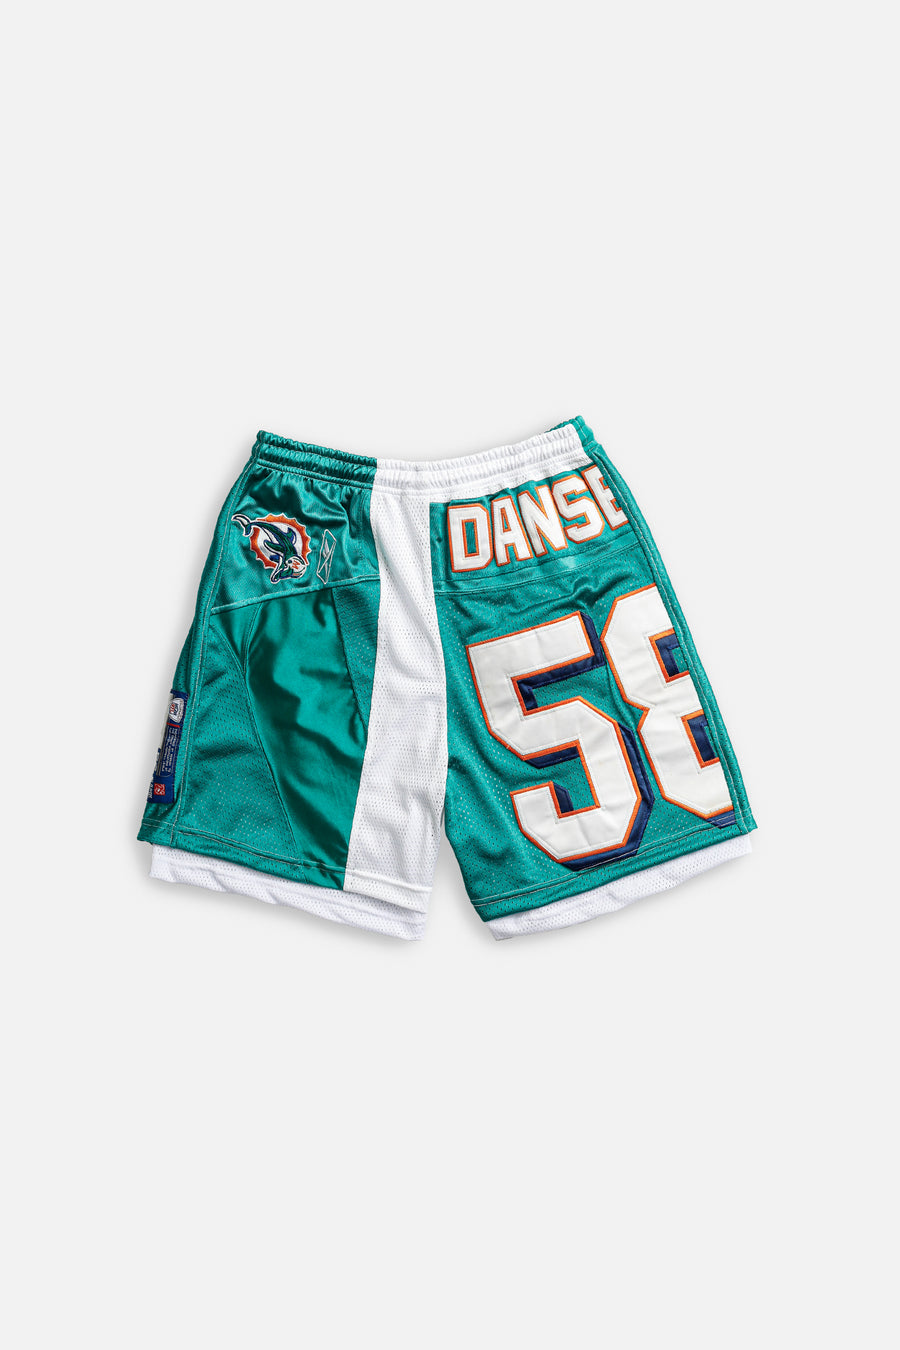 Unisex Rework Miami Dolphins NFL Jersey Shorts - L